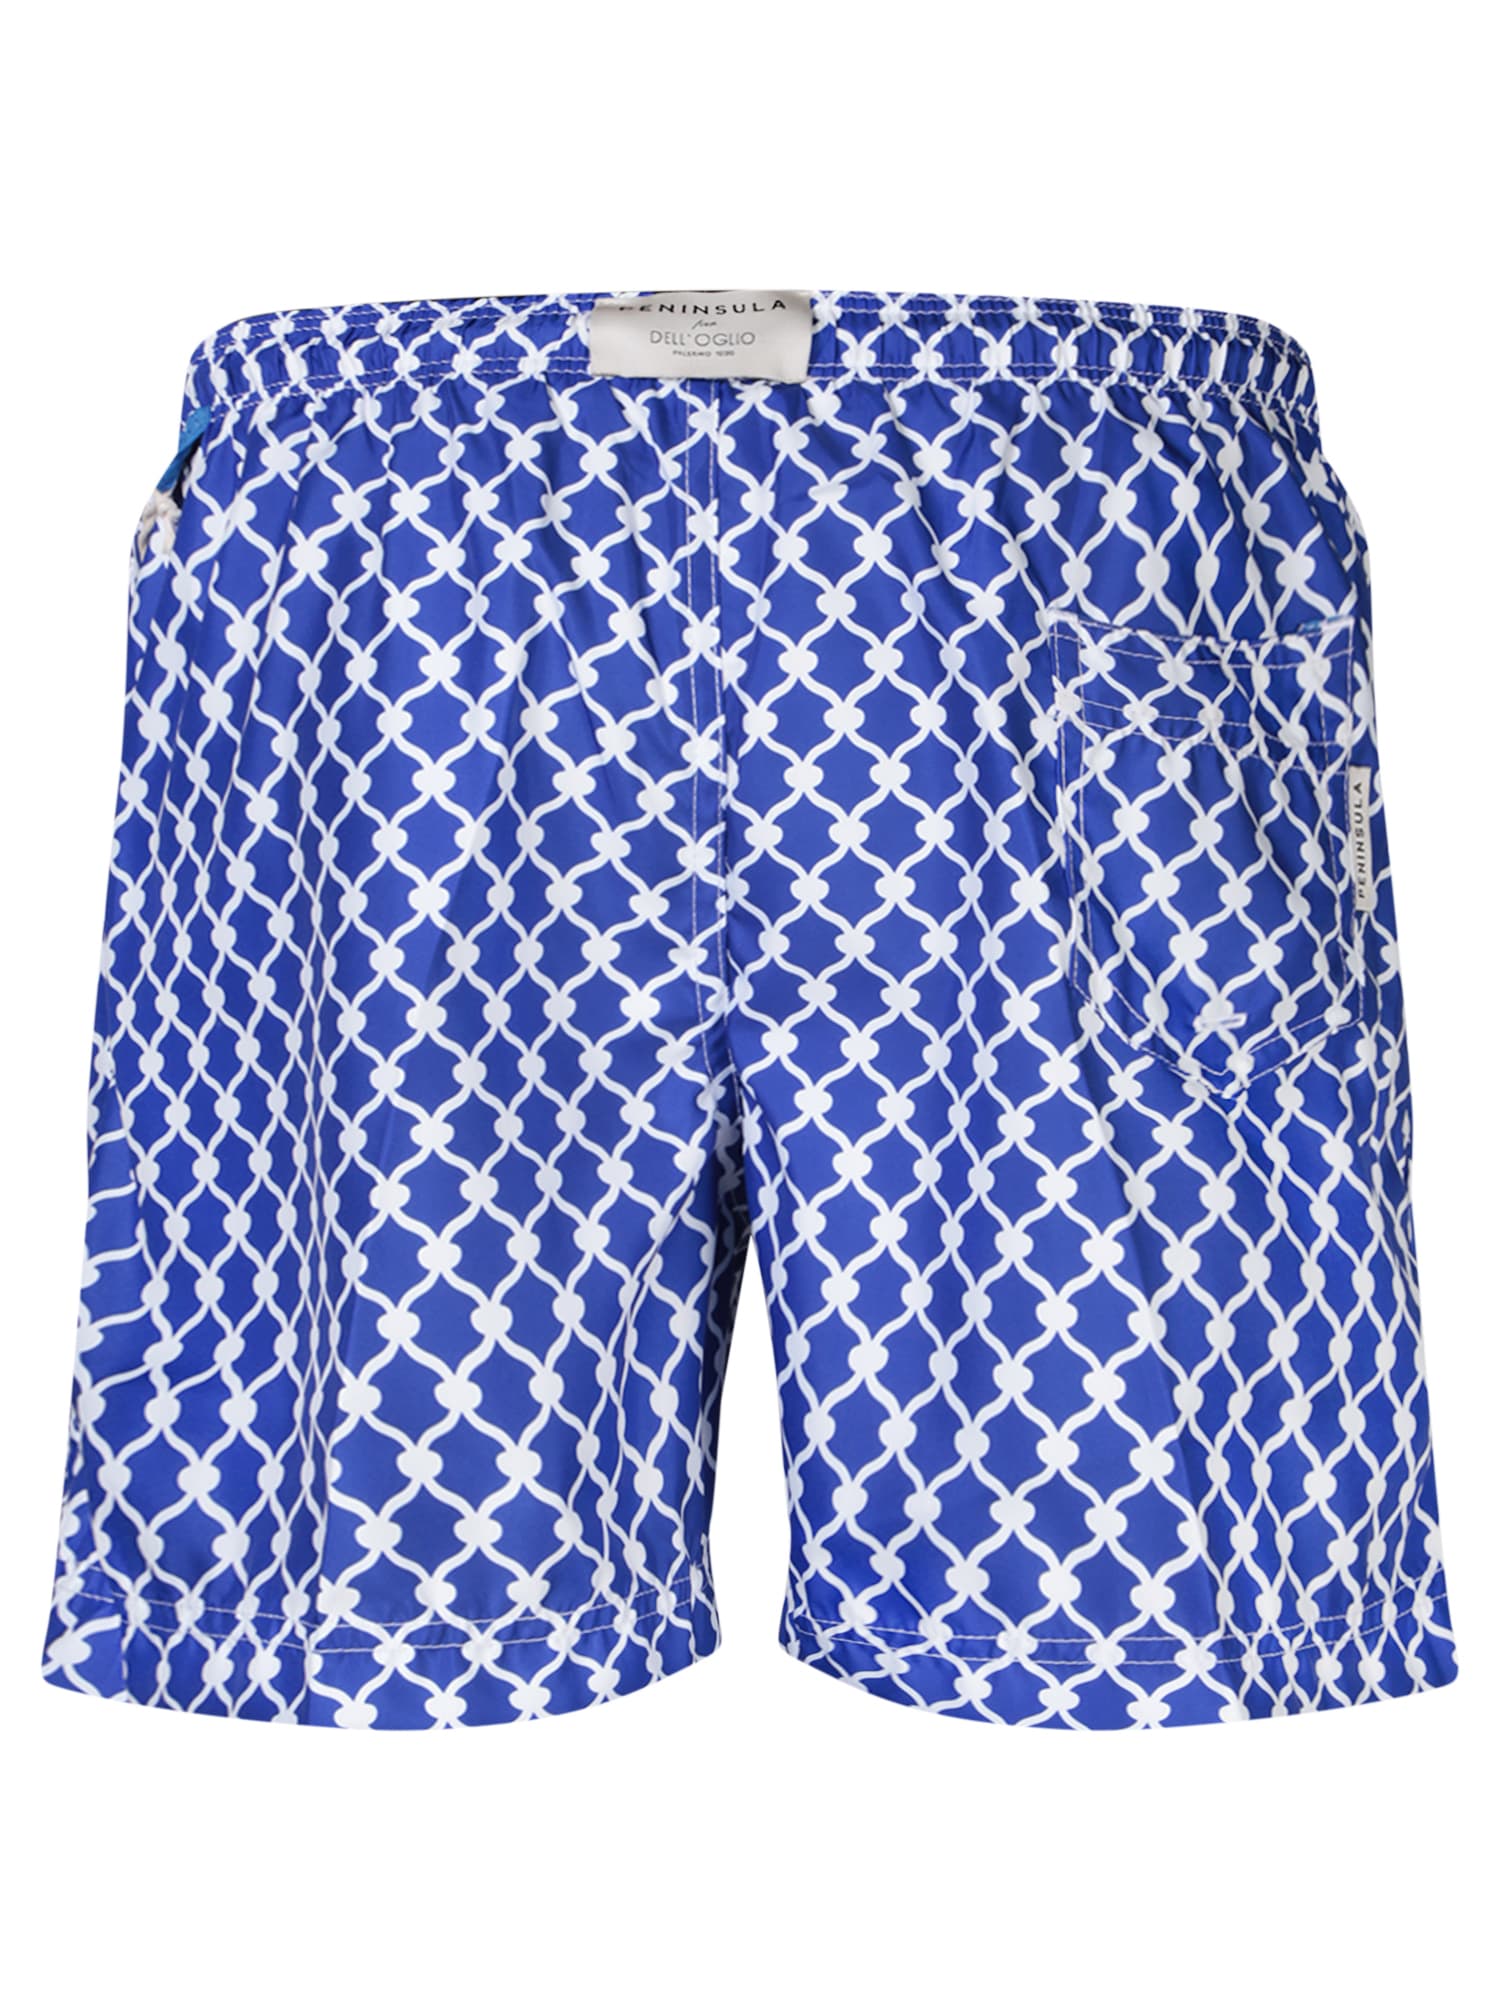 Shop Peninsula Swimwear Patterned Blue/white Boxer Swim Shorts